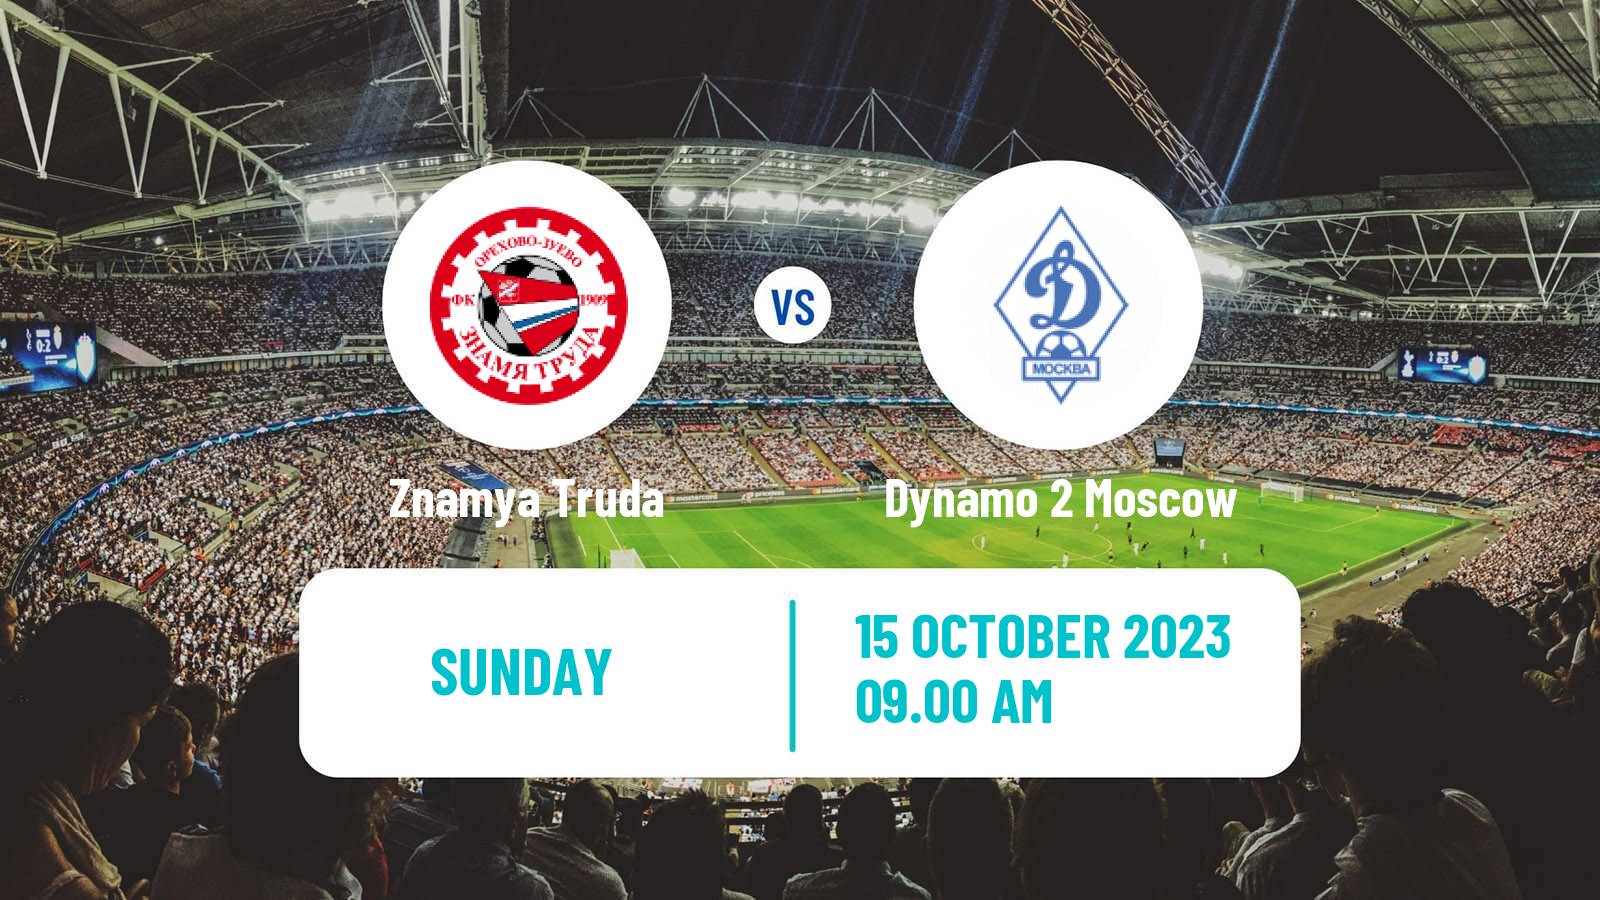 Soccer FNL 2 Division B Group 2 Znamya Truda - Dynamo 2 Moscow